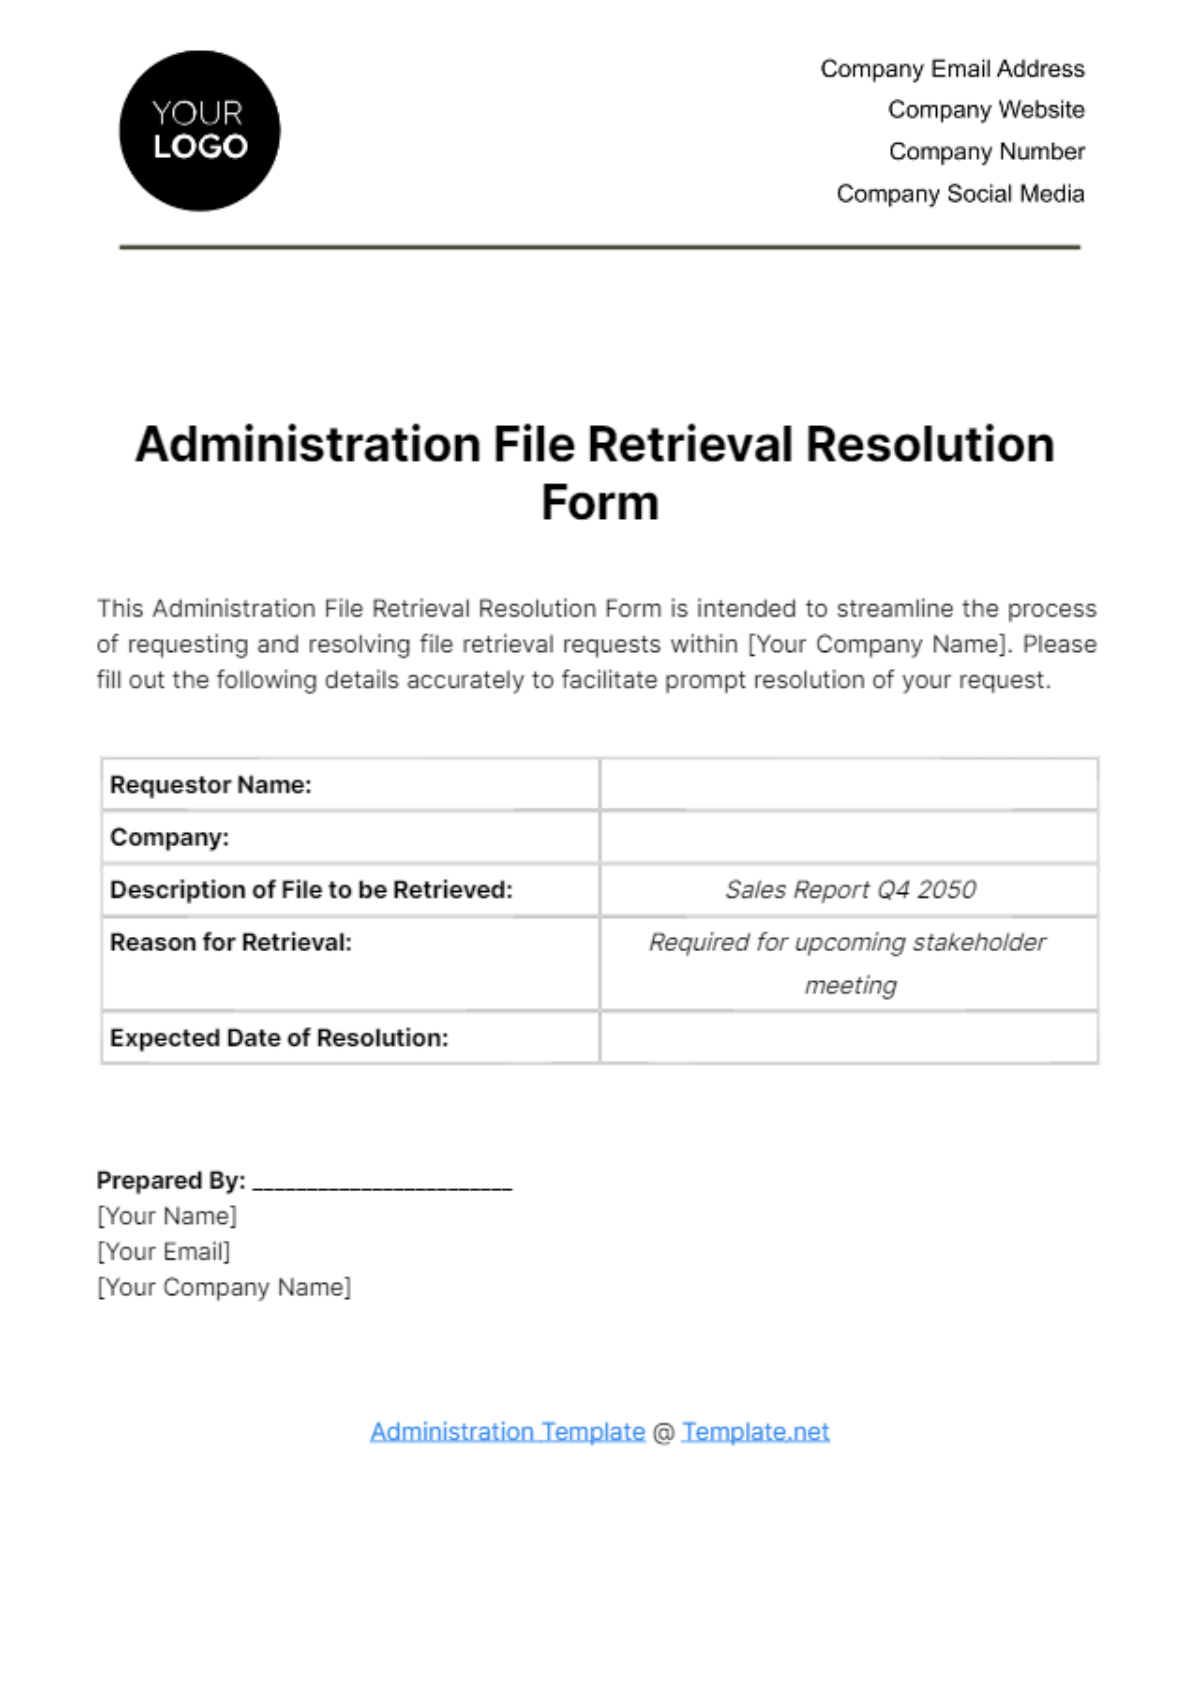 Free Administration File Retrieval Resolution Form Template